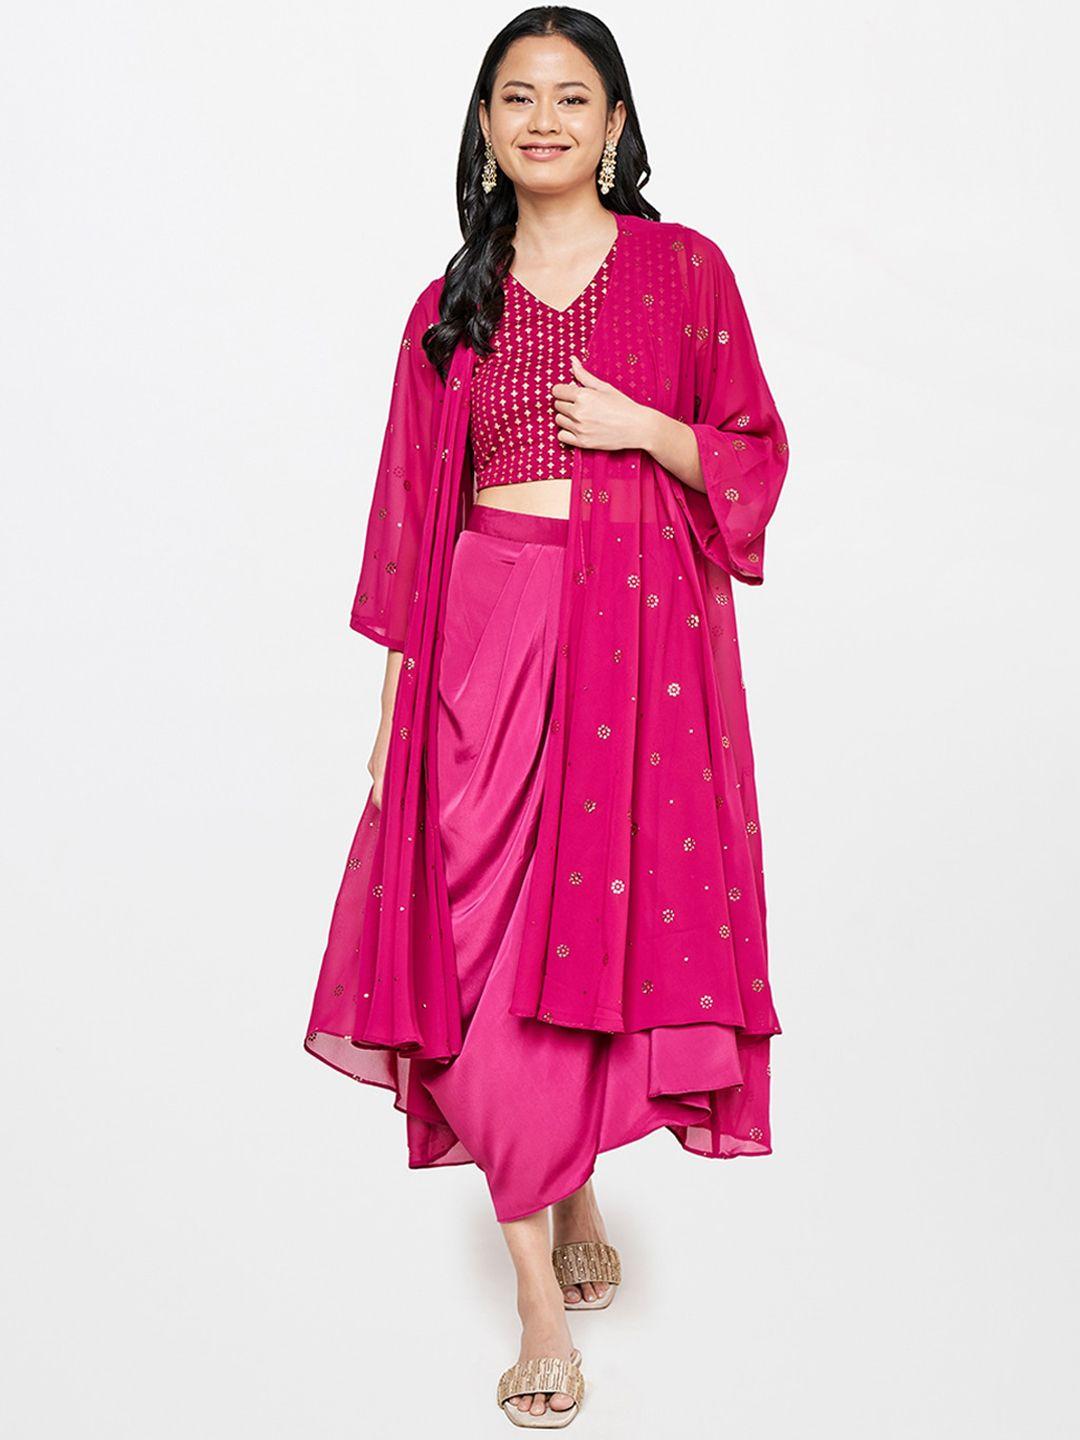 global desi women pink ethnic motifs printed top with skirt & jacket